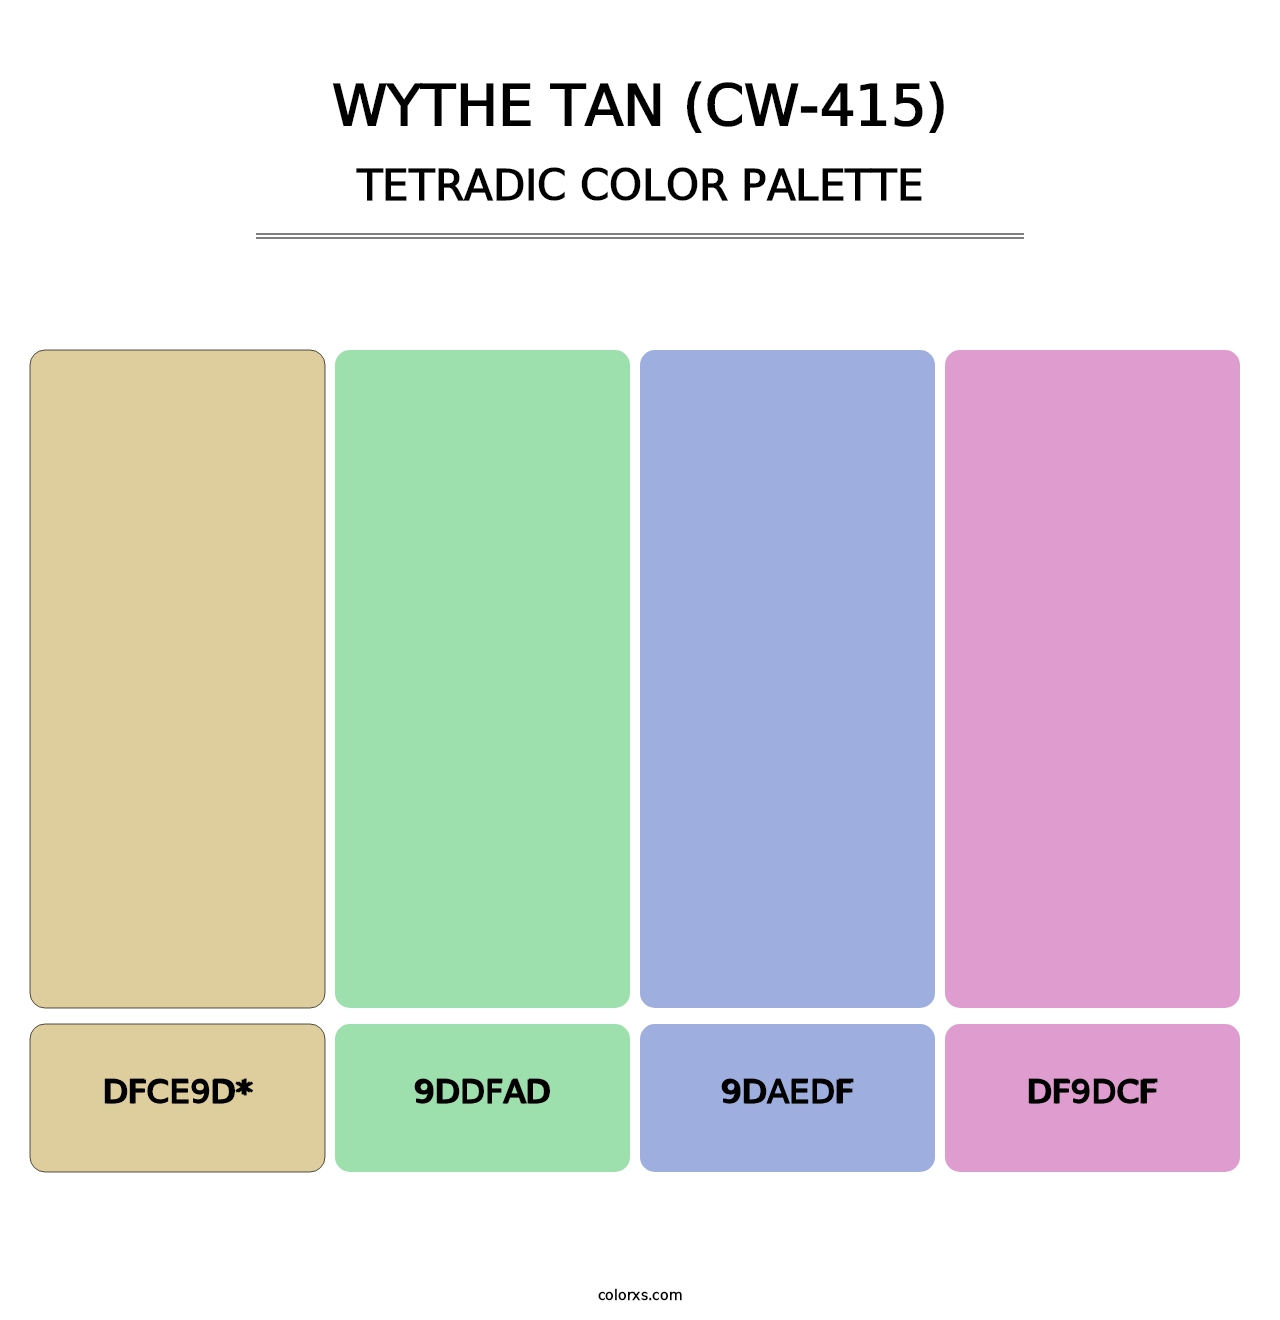 Wythe Tan (CW-415) - Tetradic Color Palette